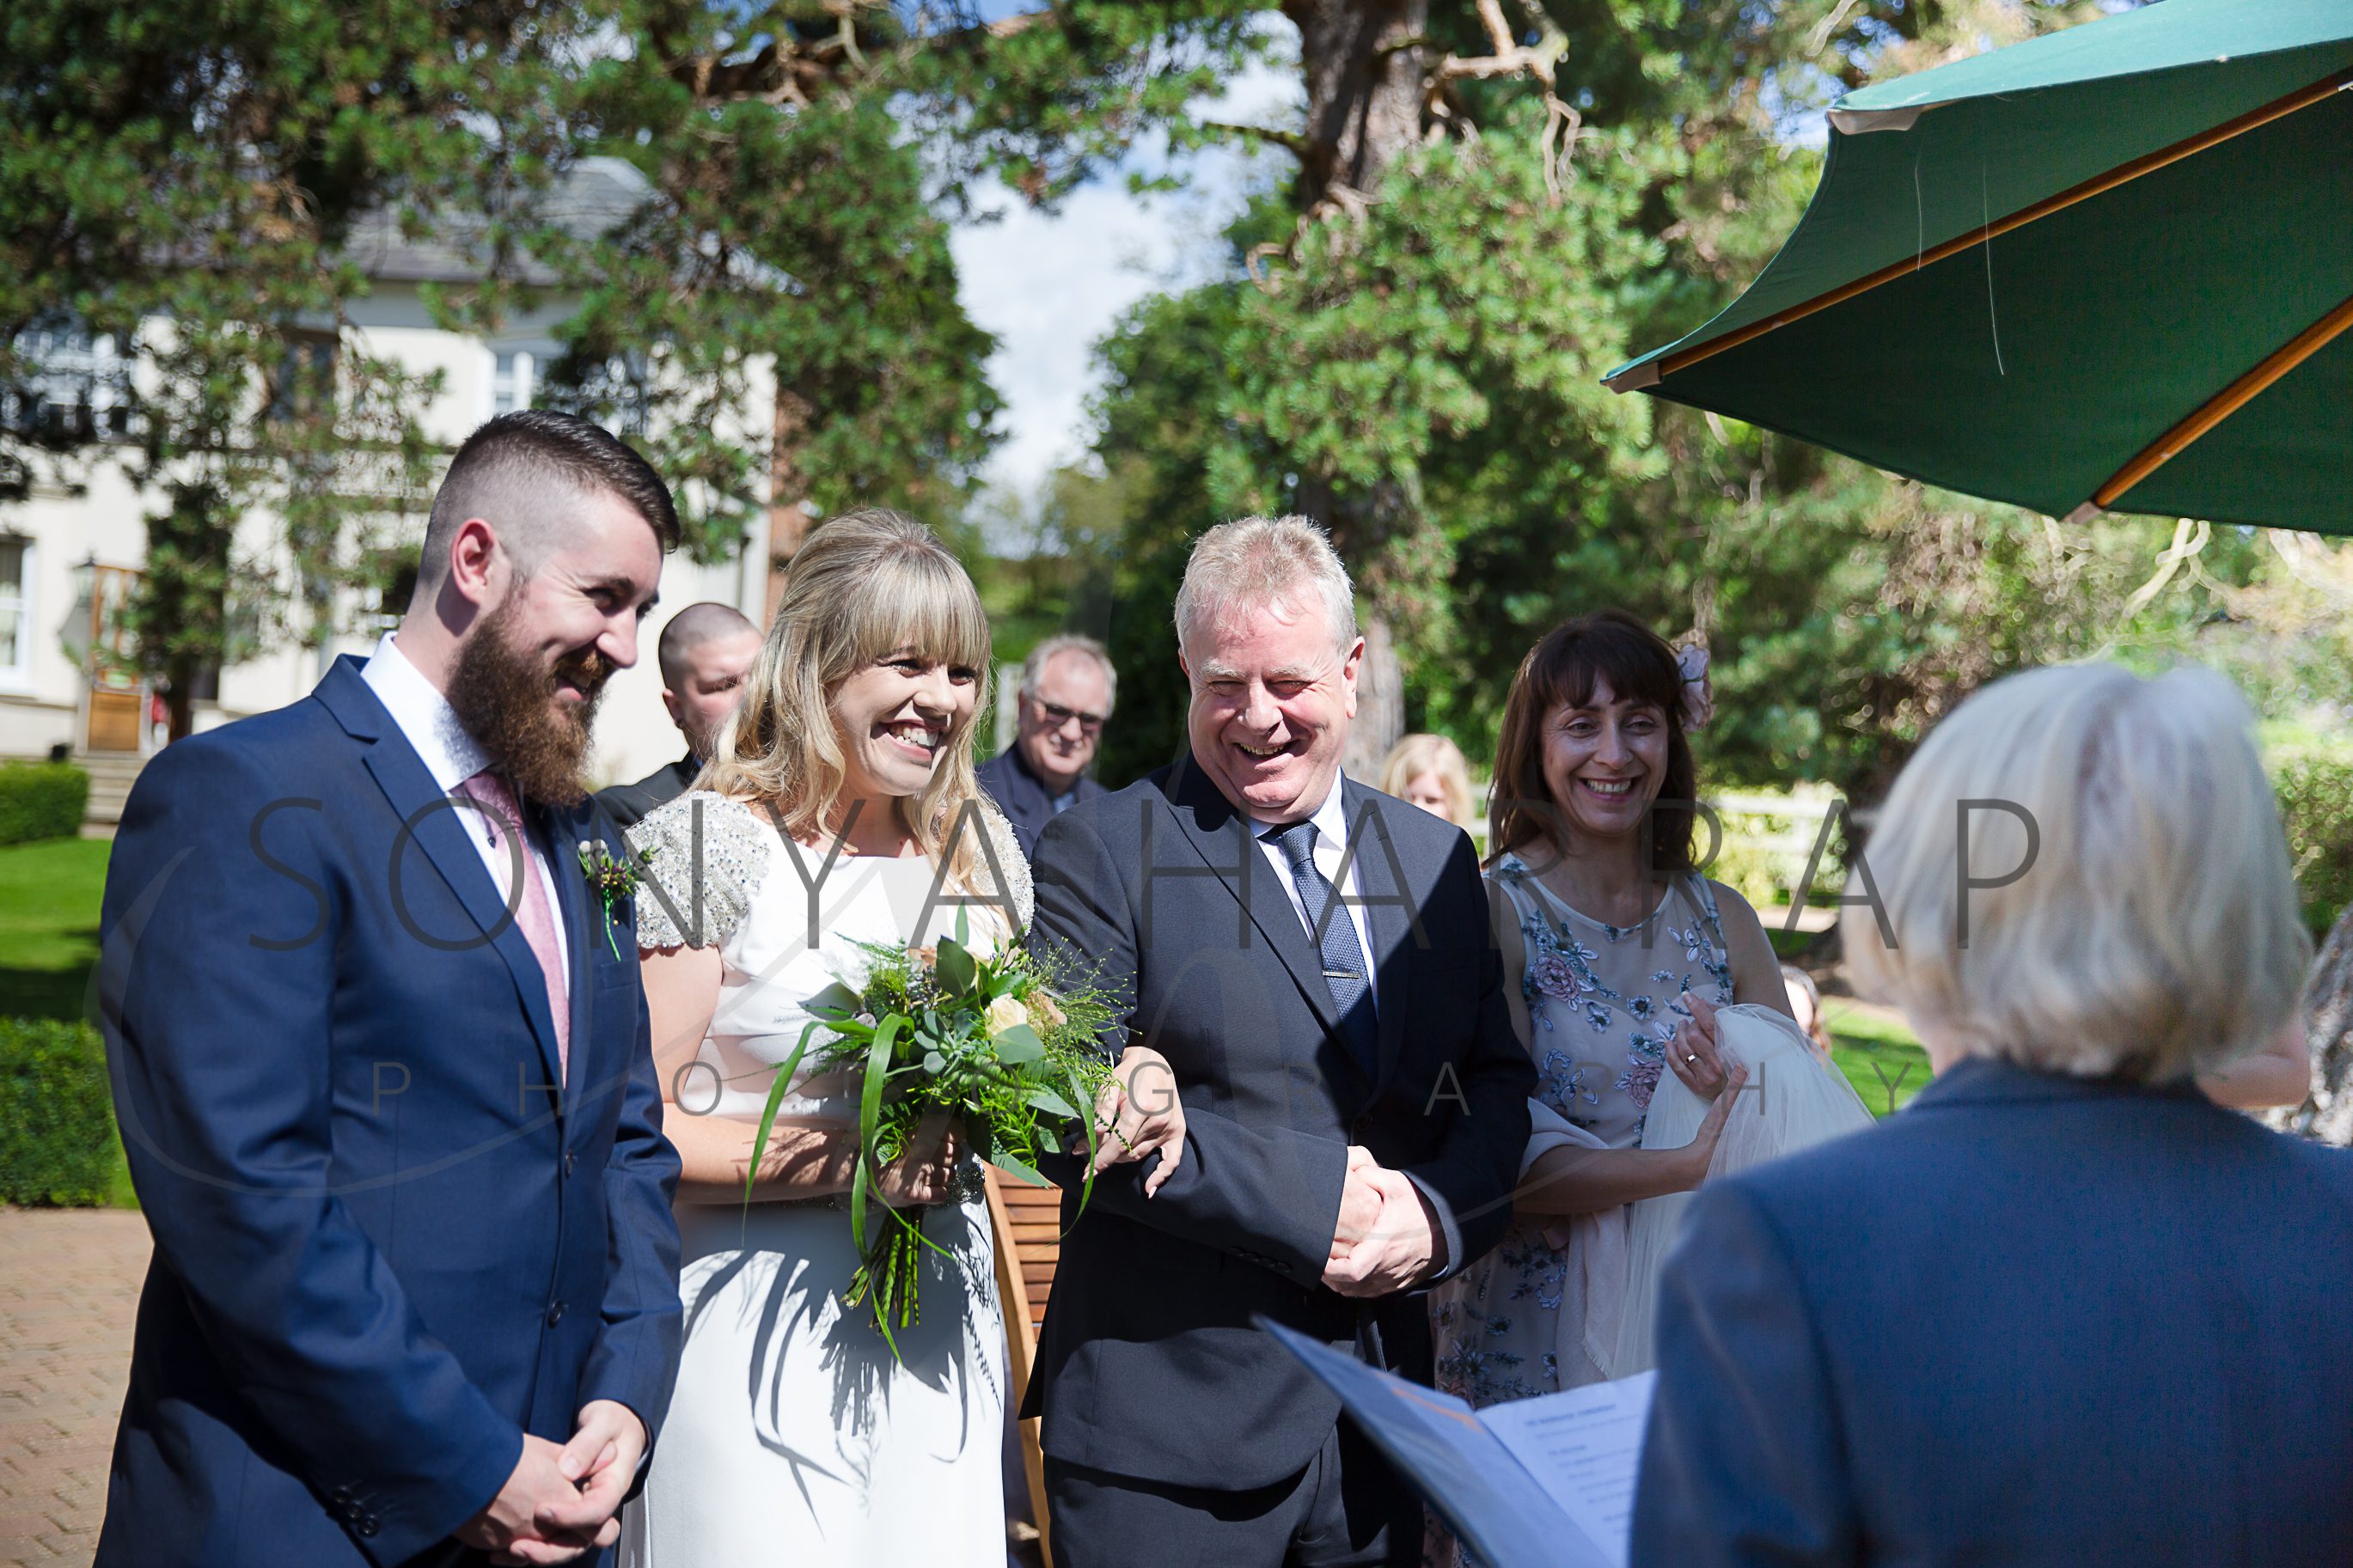 Tewinbury farm hotel hertfordshire wedding photograph of bride and groom outdoor ceremony by Sonya Harrap photographer